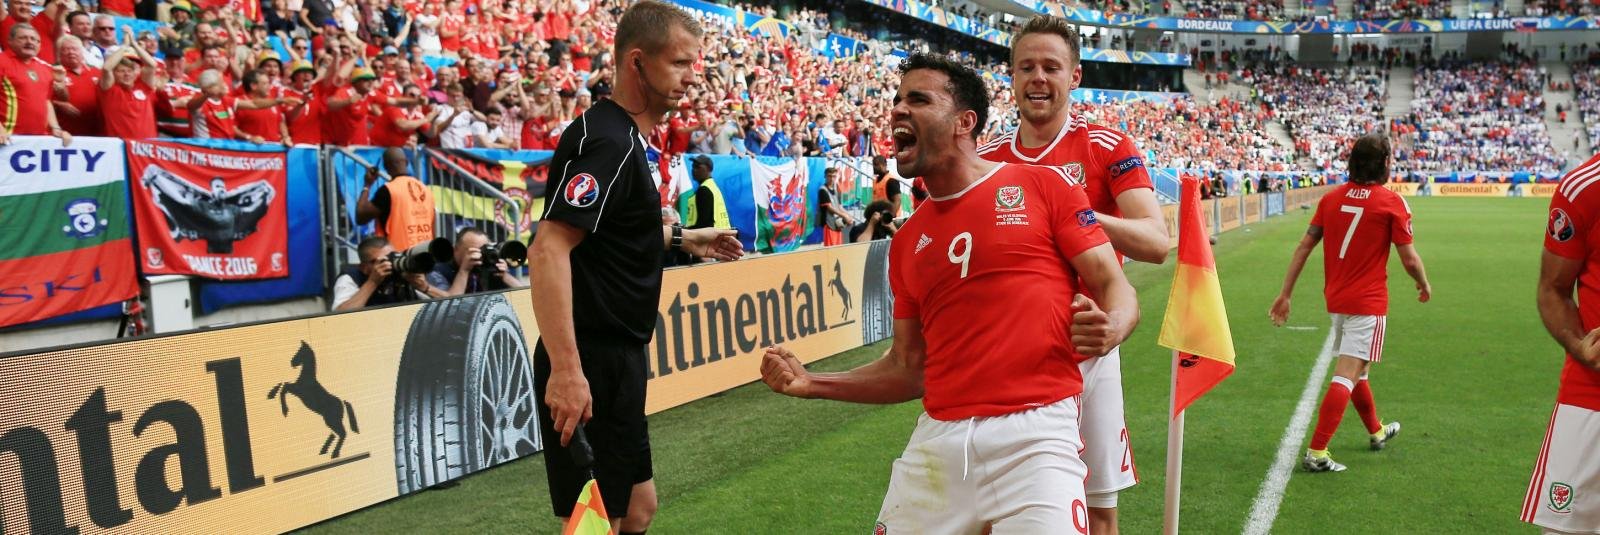 Wales 2-1 Slovakia: EURO 2016 Group B Report